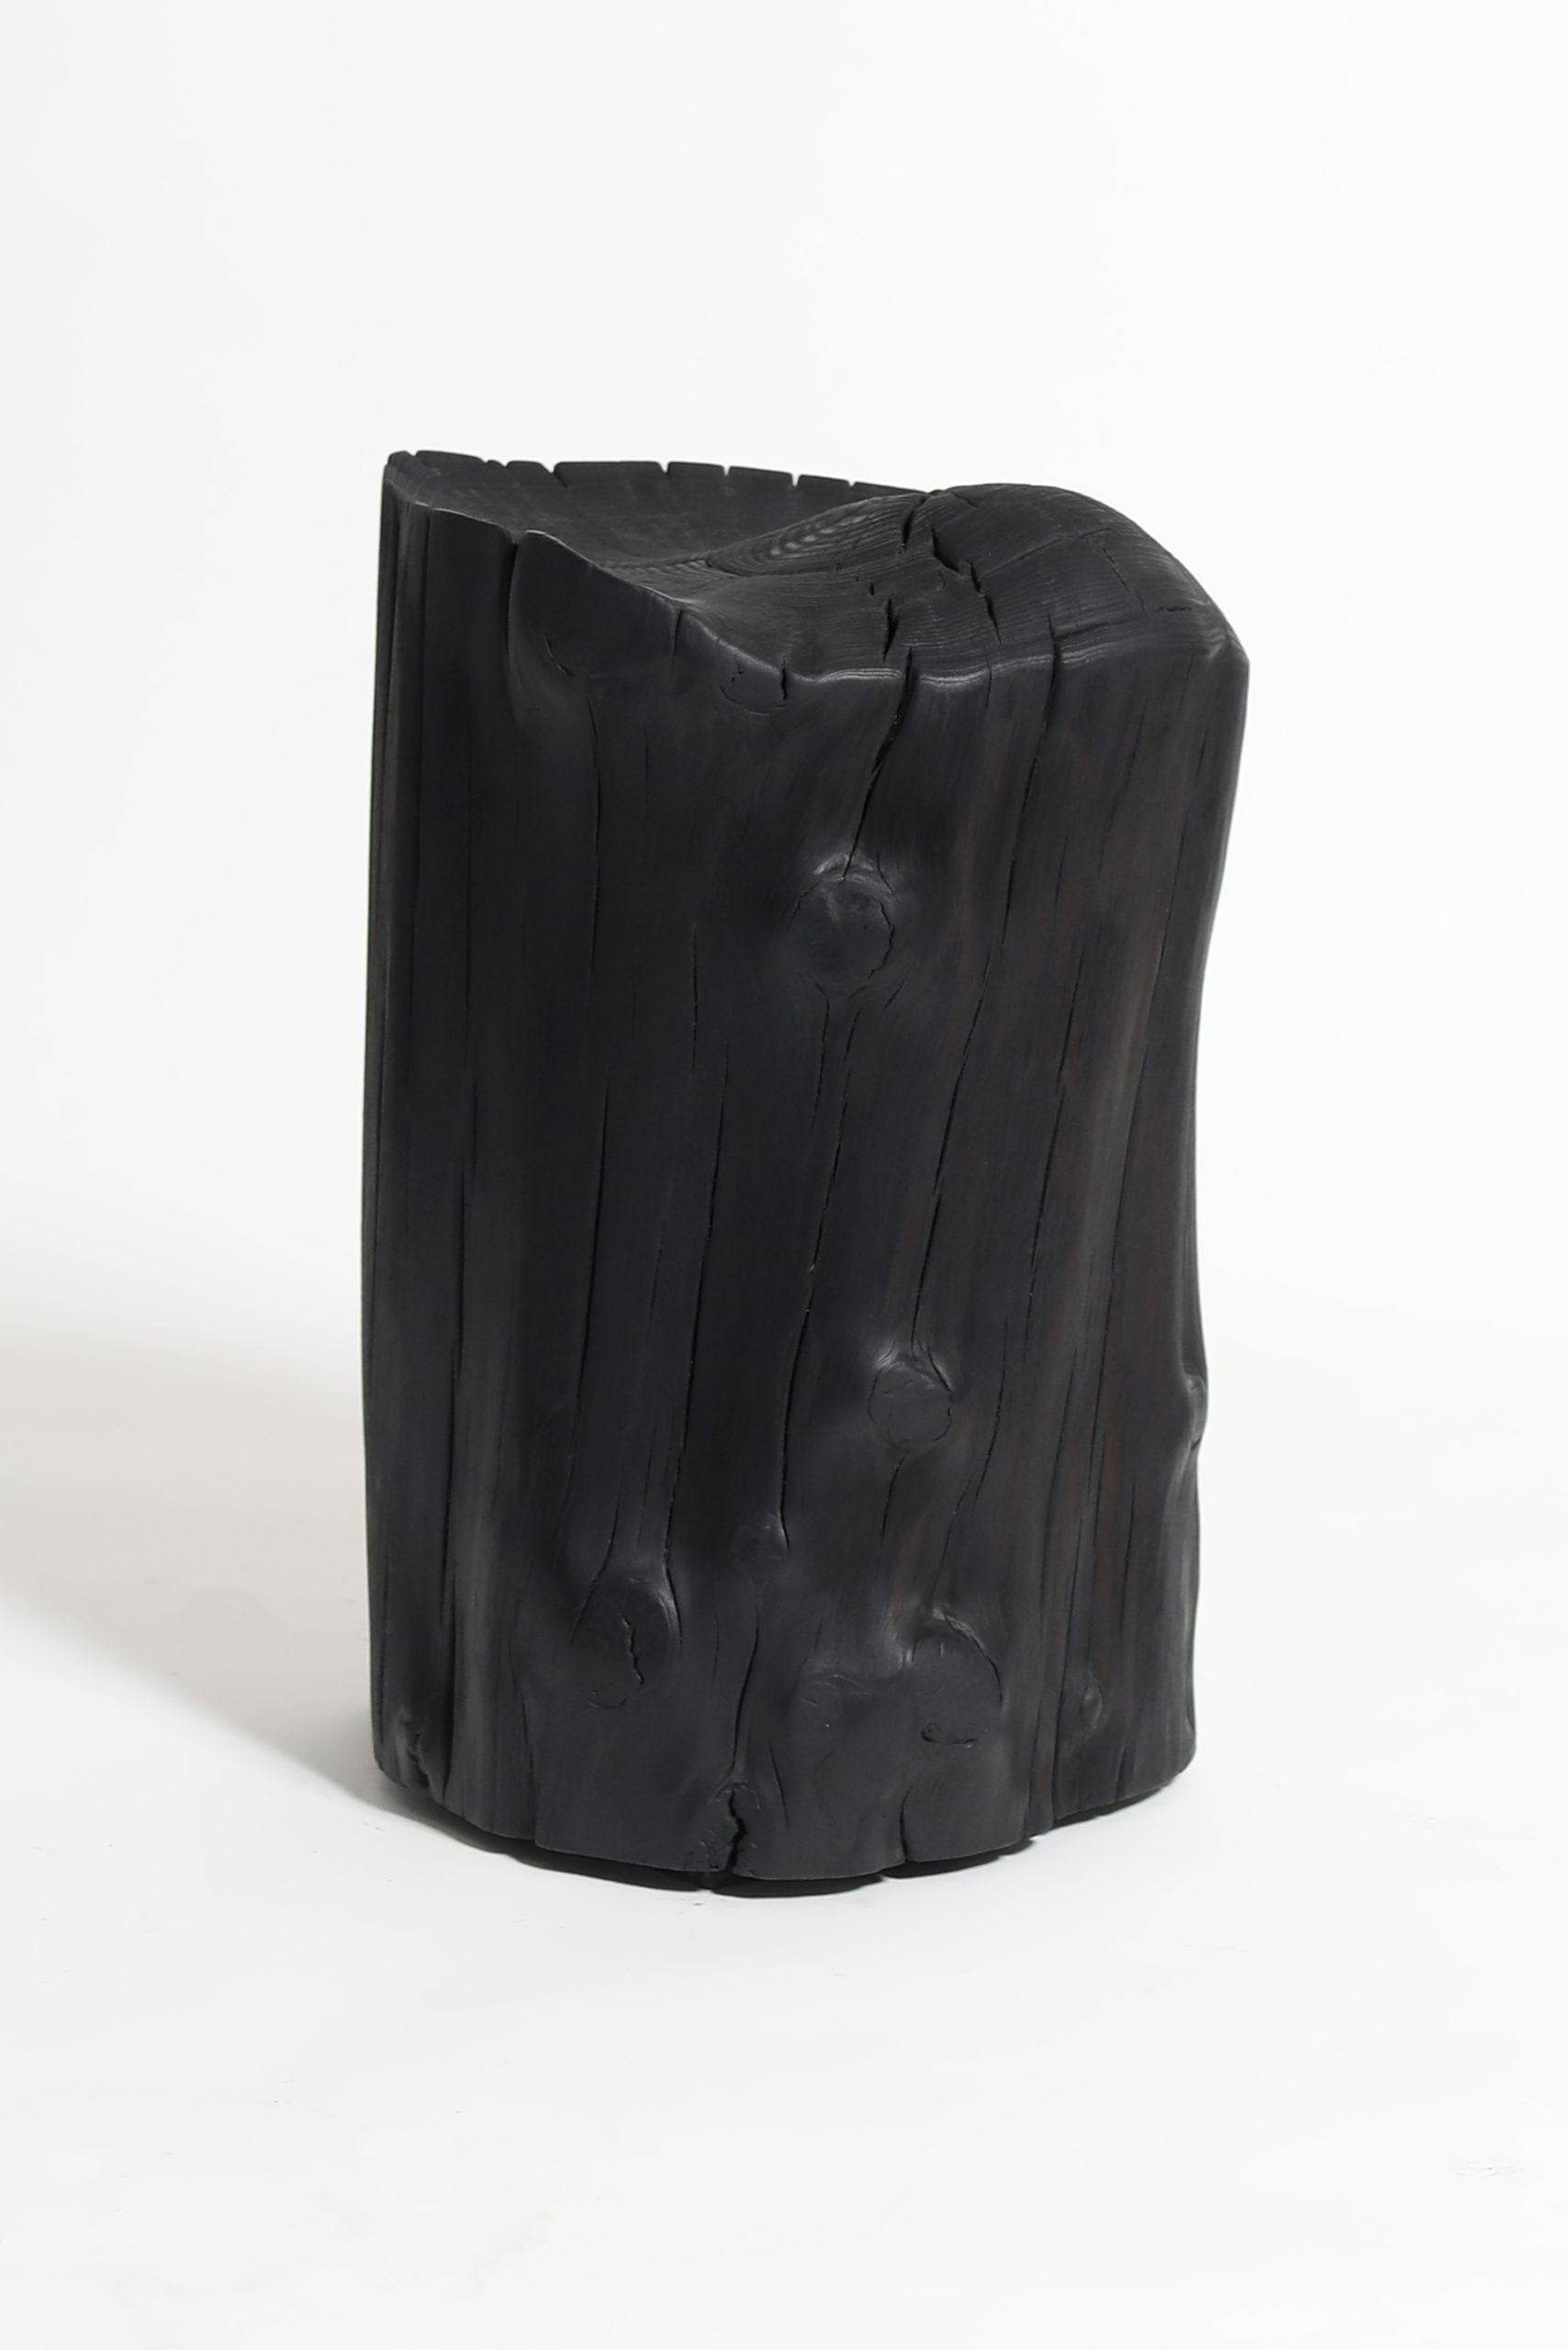 Modern Black Wooden Stool, Burned Chunk by Jesse Sanderson for Wdstck For Sale 1